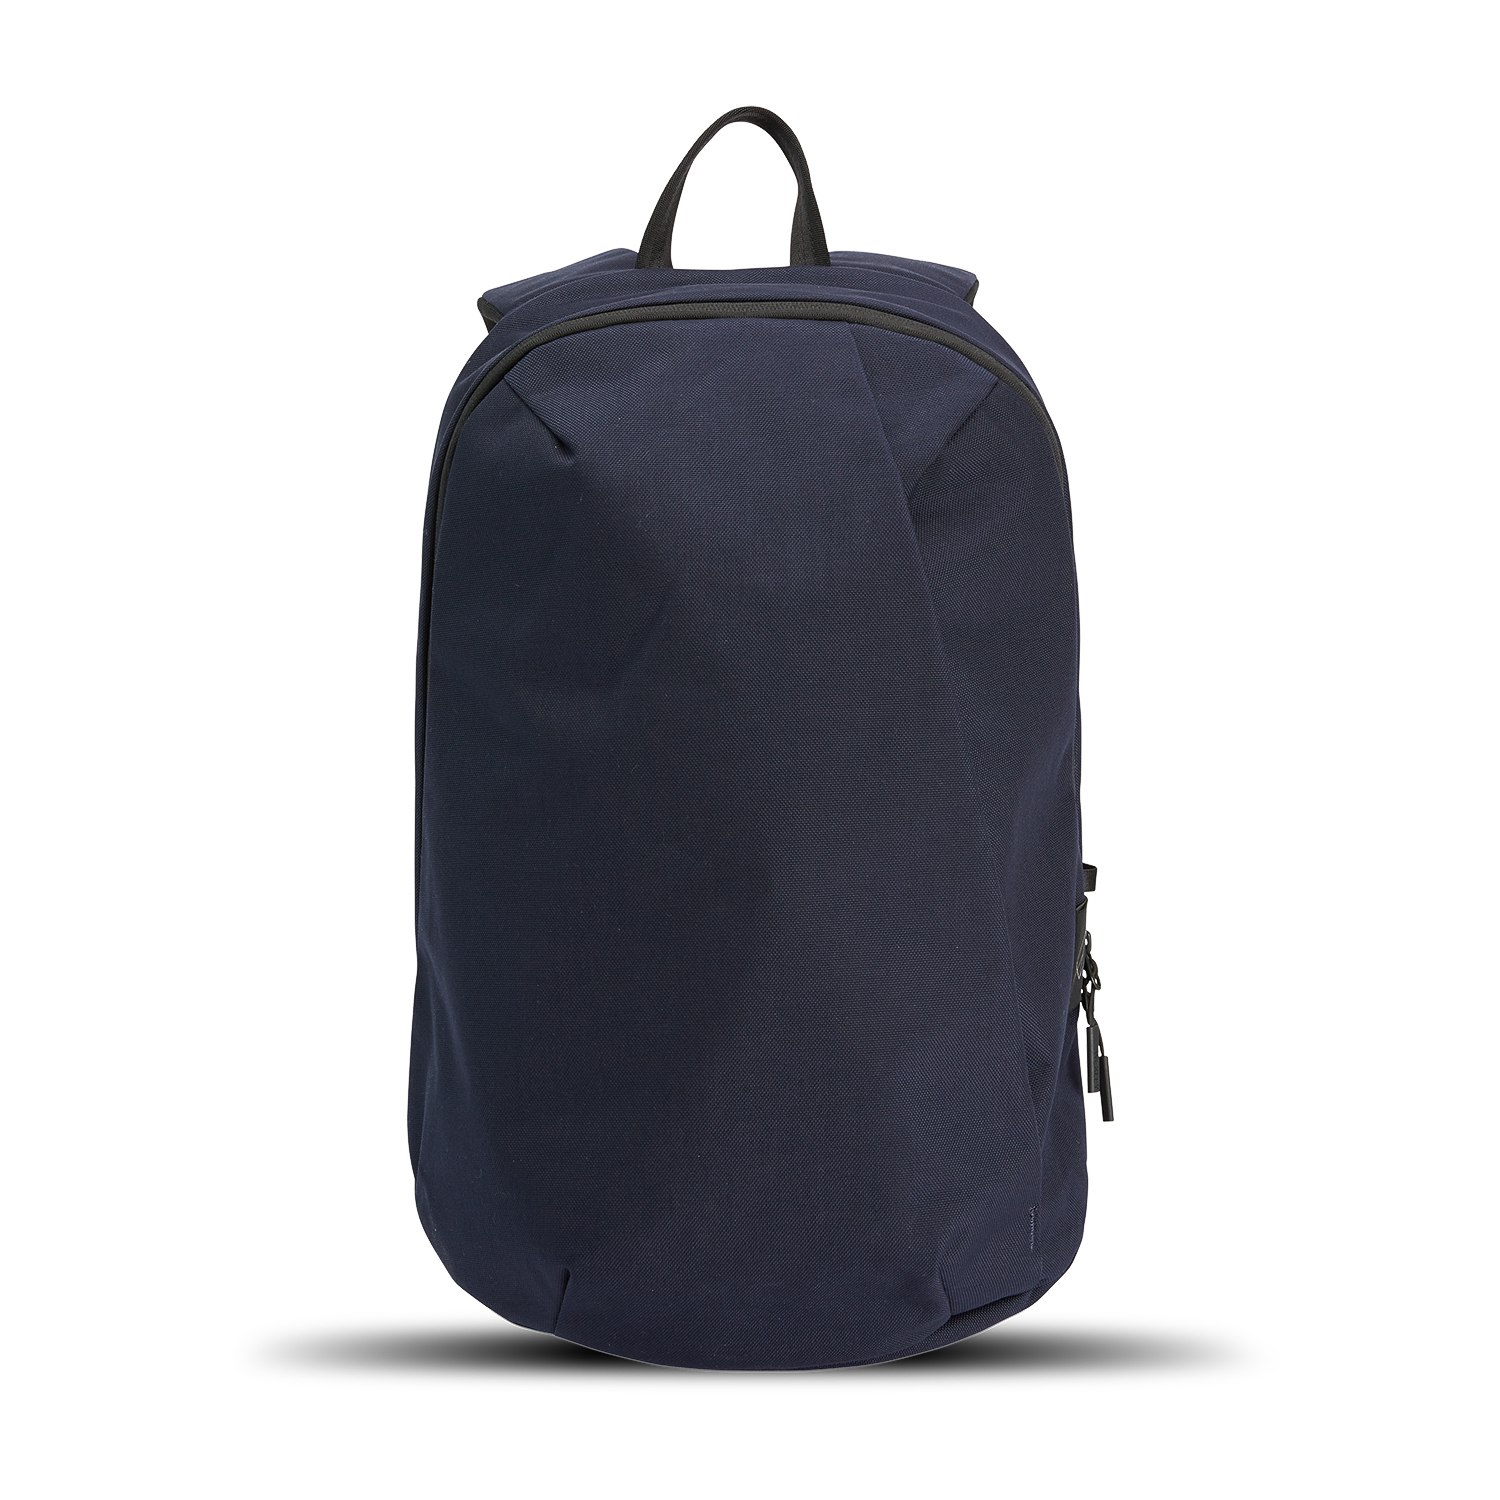 wexley stem backpack FULL CORDURA BLACK - リュック/バックパック